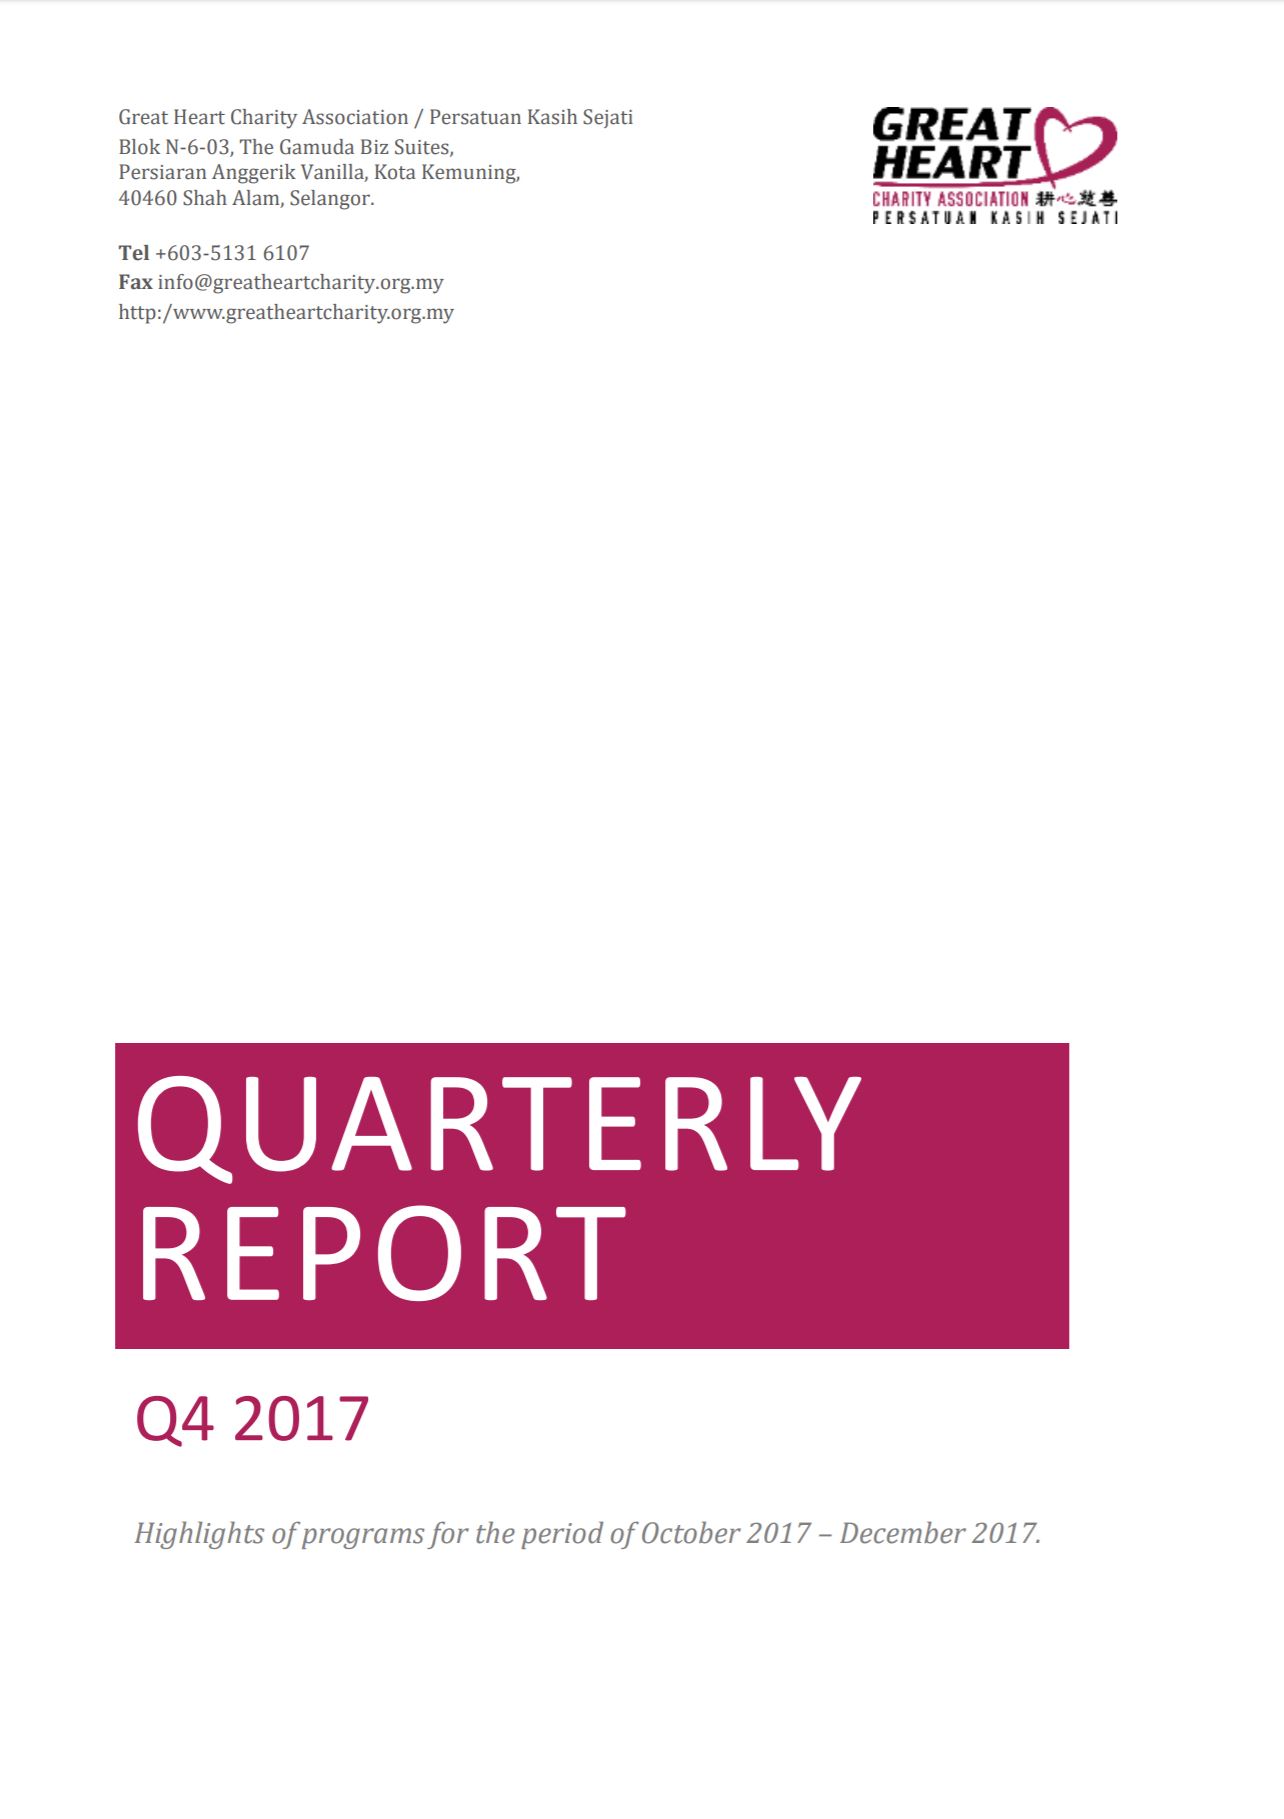 Great Heart Quarterly Report - Quarter 4 - 2017